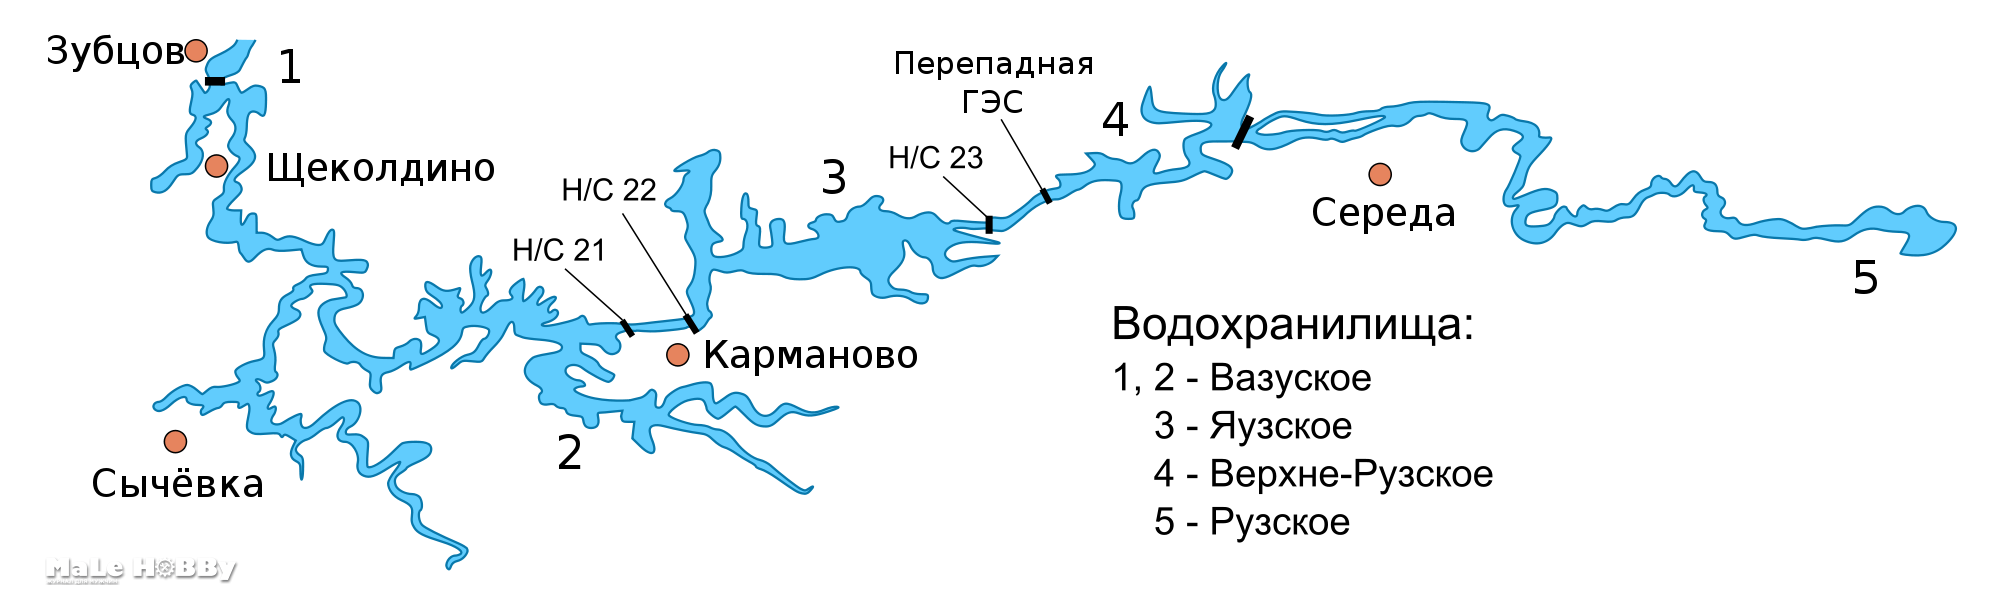 Форум вазузского водохранилища. Карта глубин Яузского водохранилища Карманово. Карта глубин Яузского водохранилища Смоленская область. Карта глубин Вазузского водохранилища. 21 Насосная станция Вазуза.